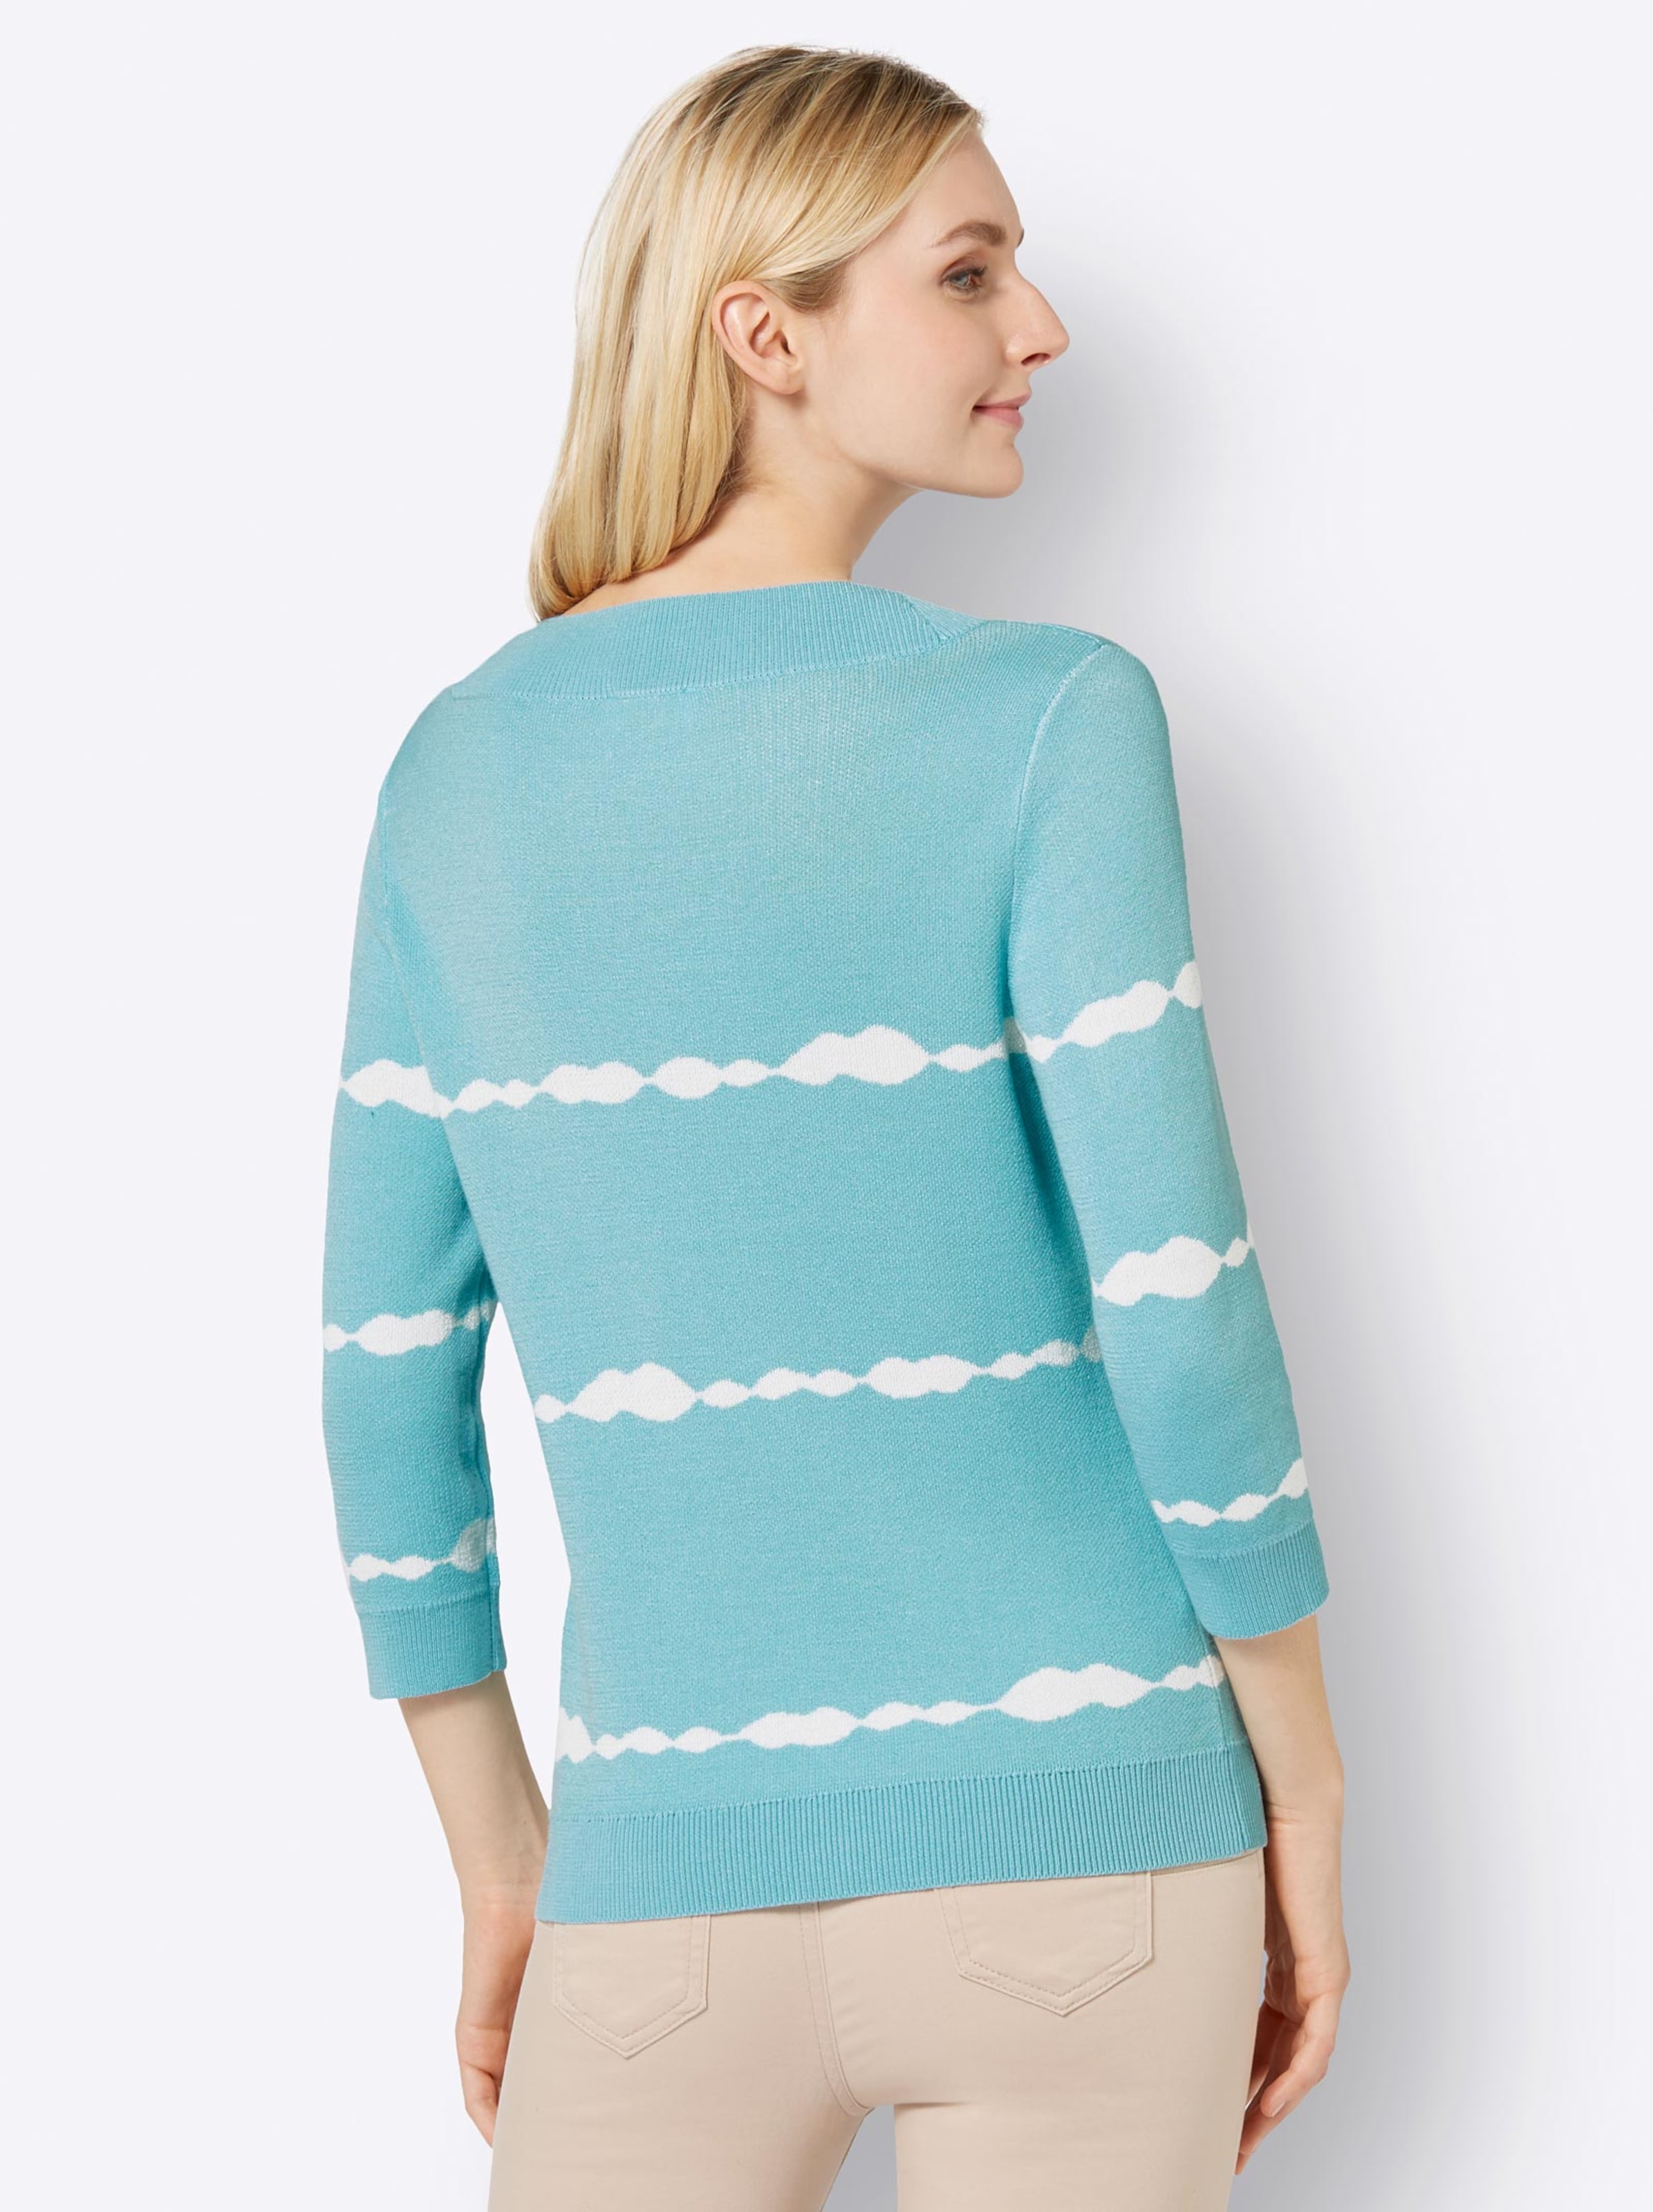 Damenmode Pullover Langarm-Pullover in aquamarin-ecru-bedruckt 